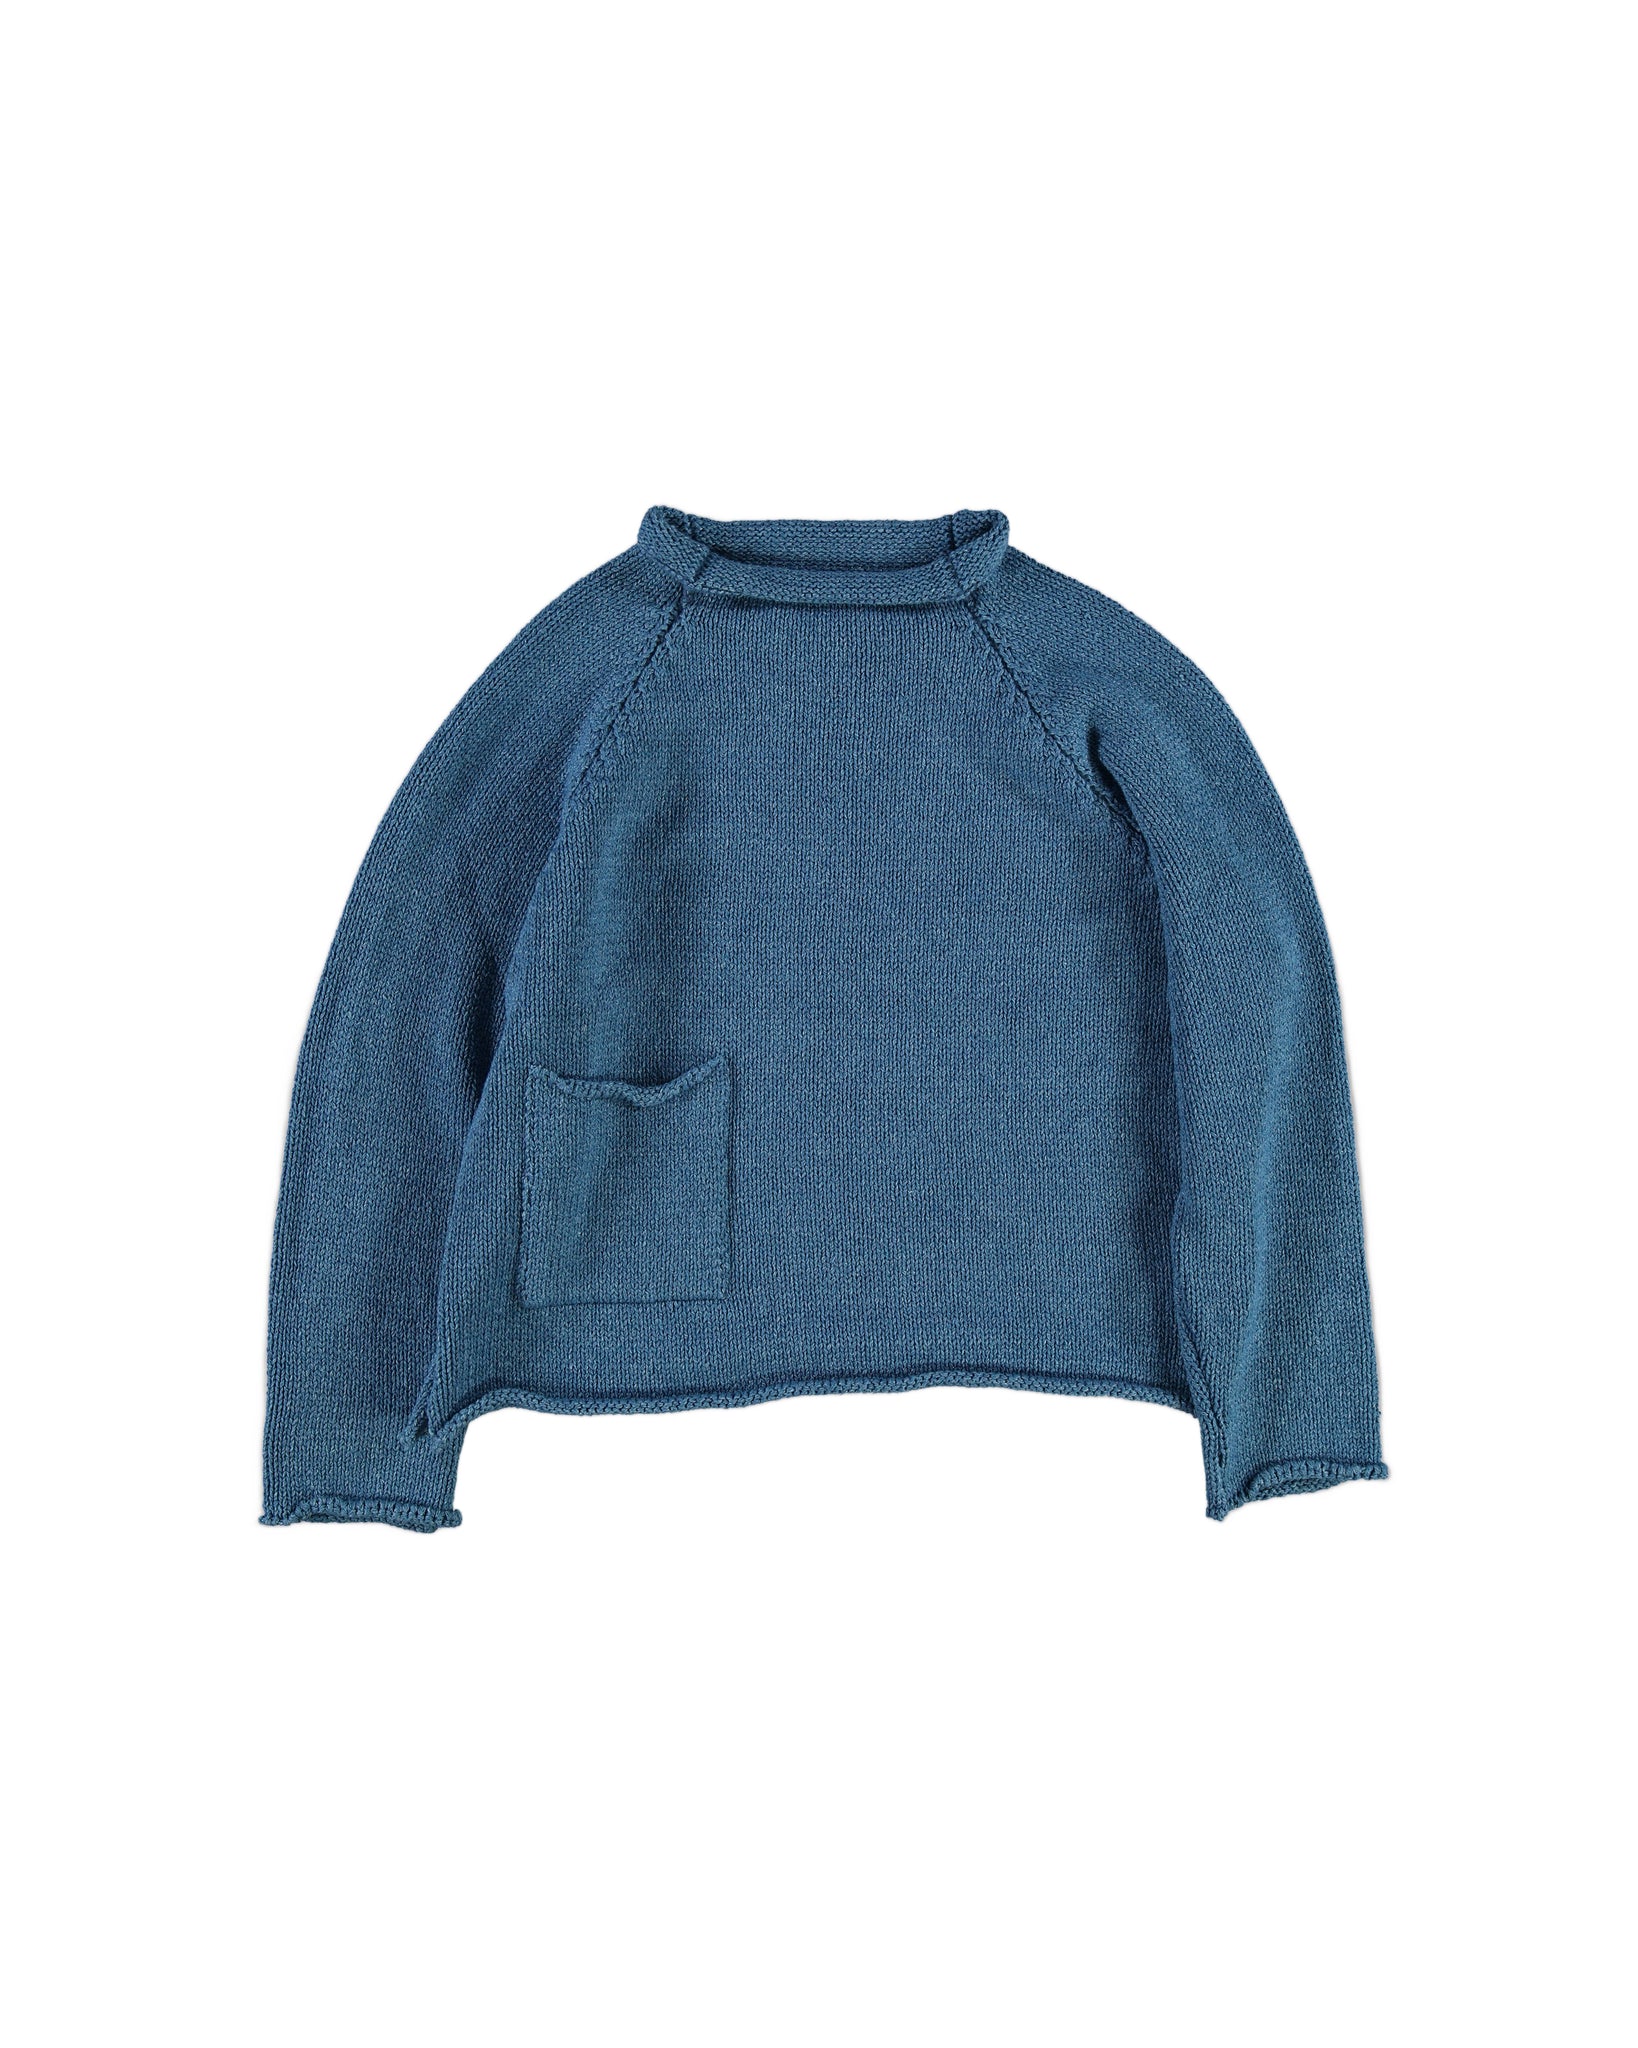 Indigo Cotton Fisherman Sweater, Blue